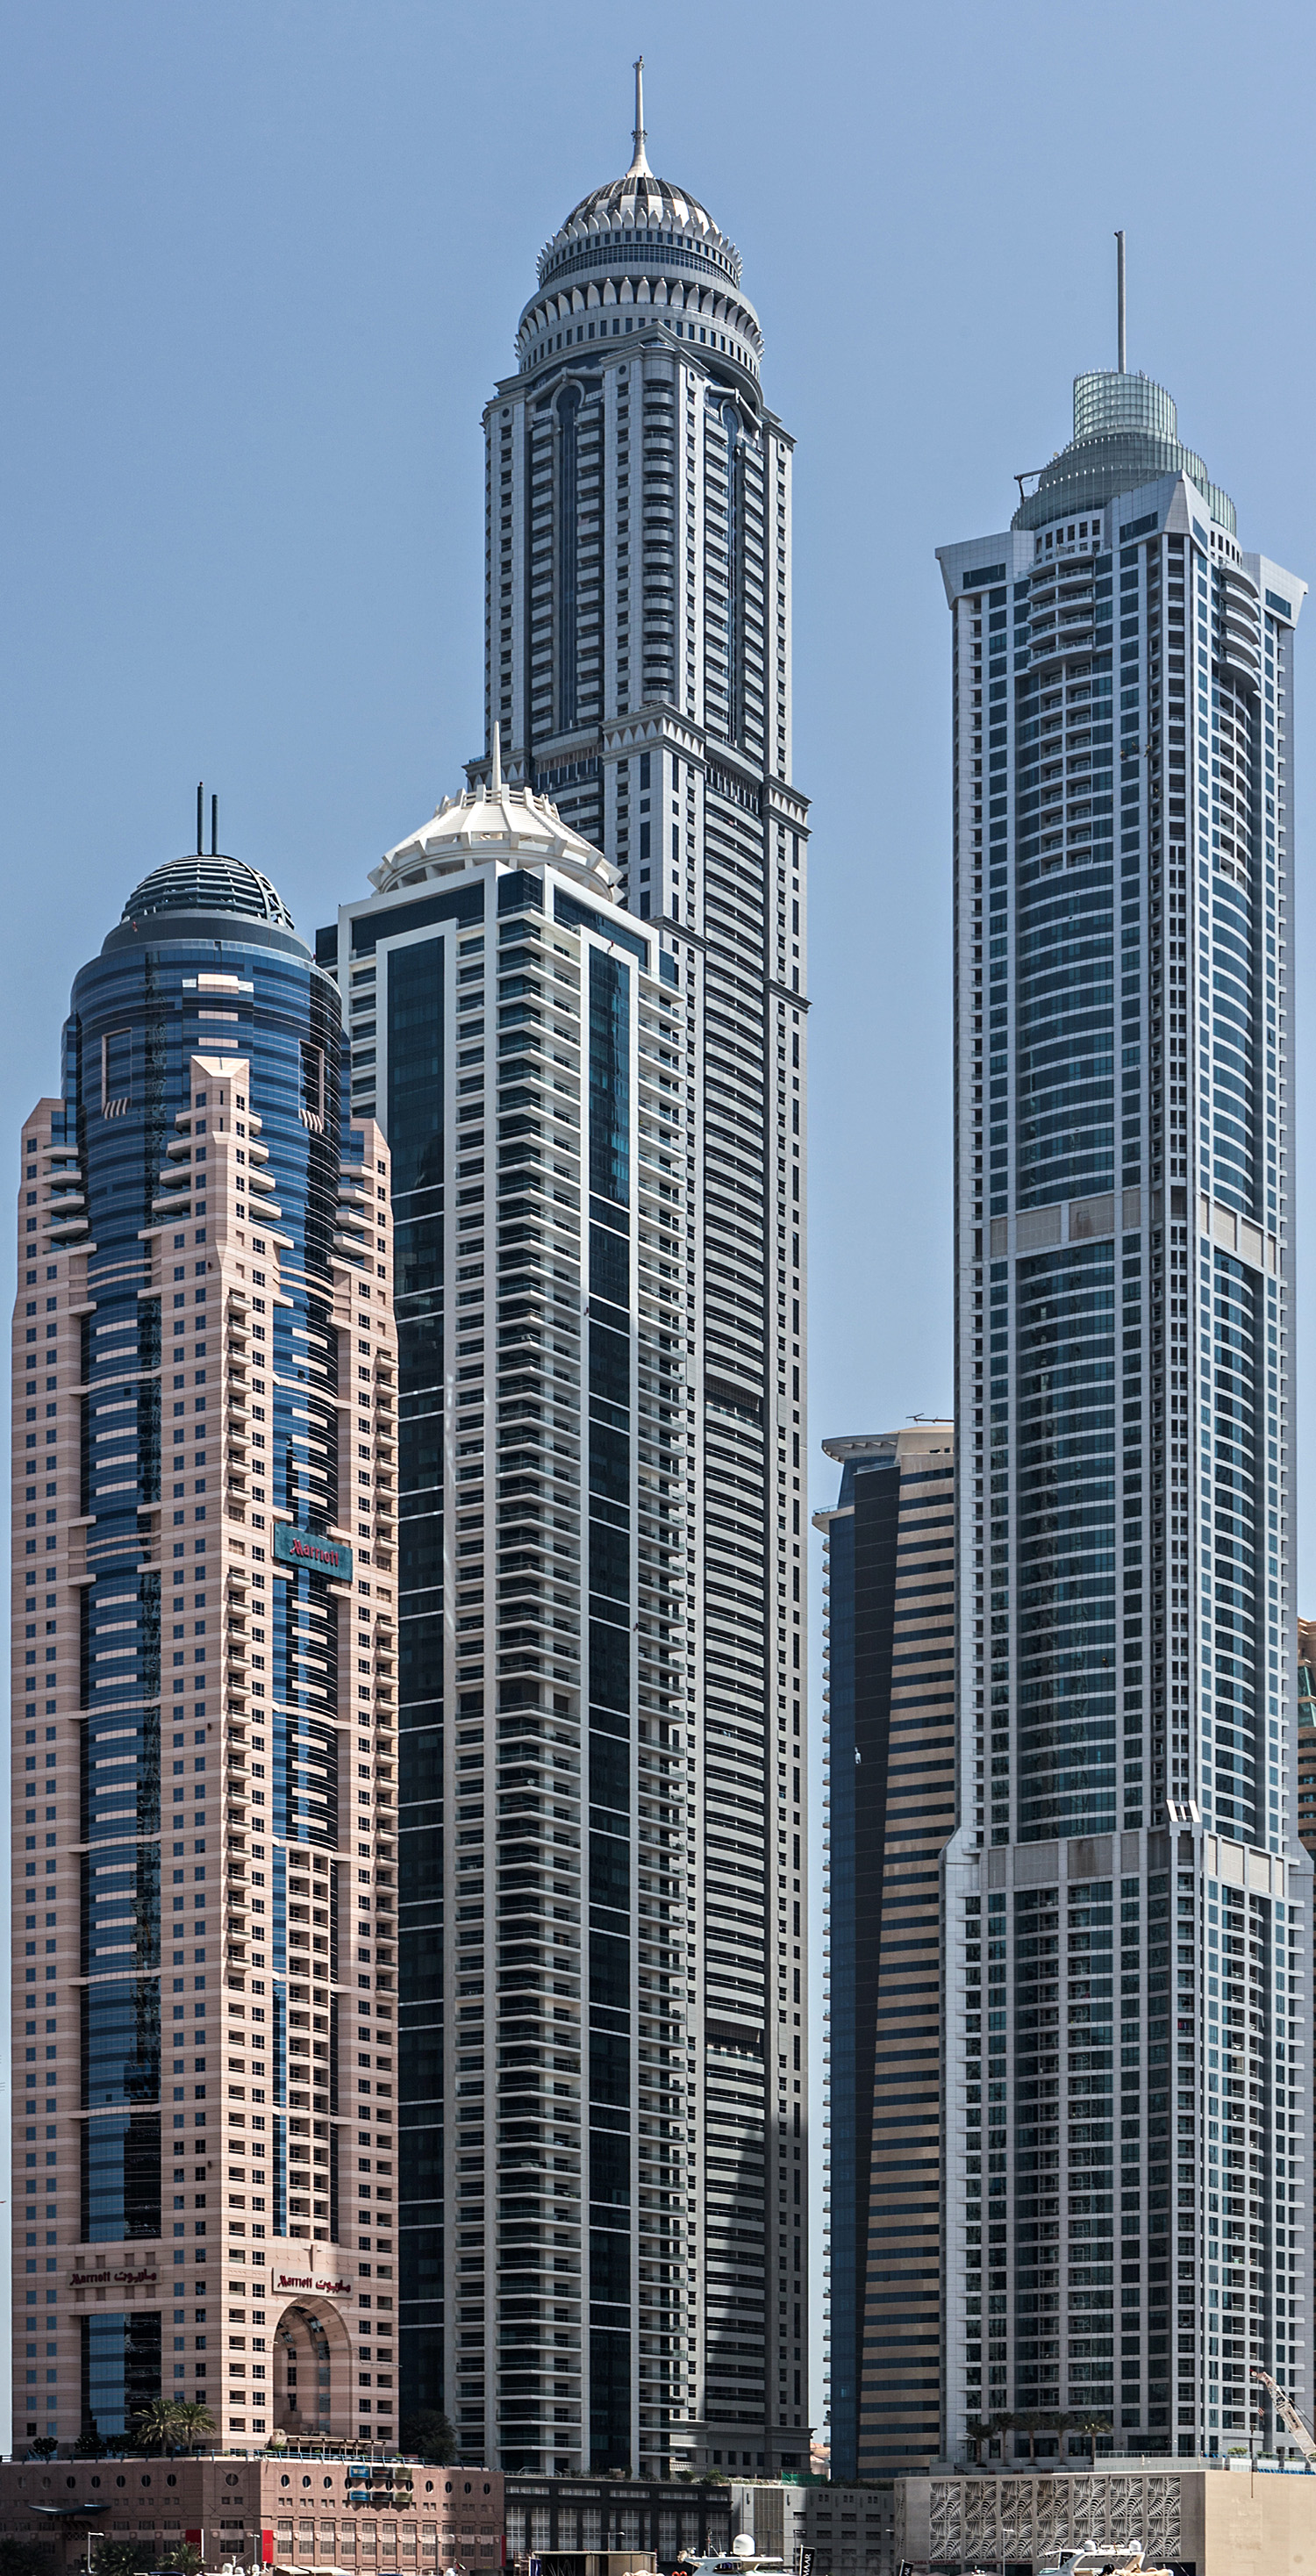 Princess Tower, Dubai - Behind other supertalls. © Mathias Beinling